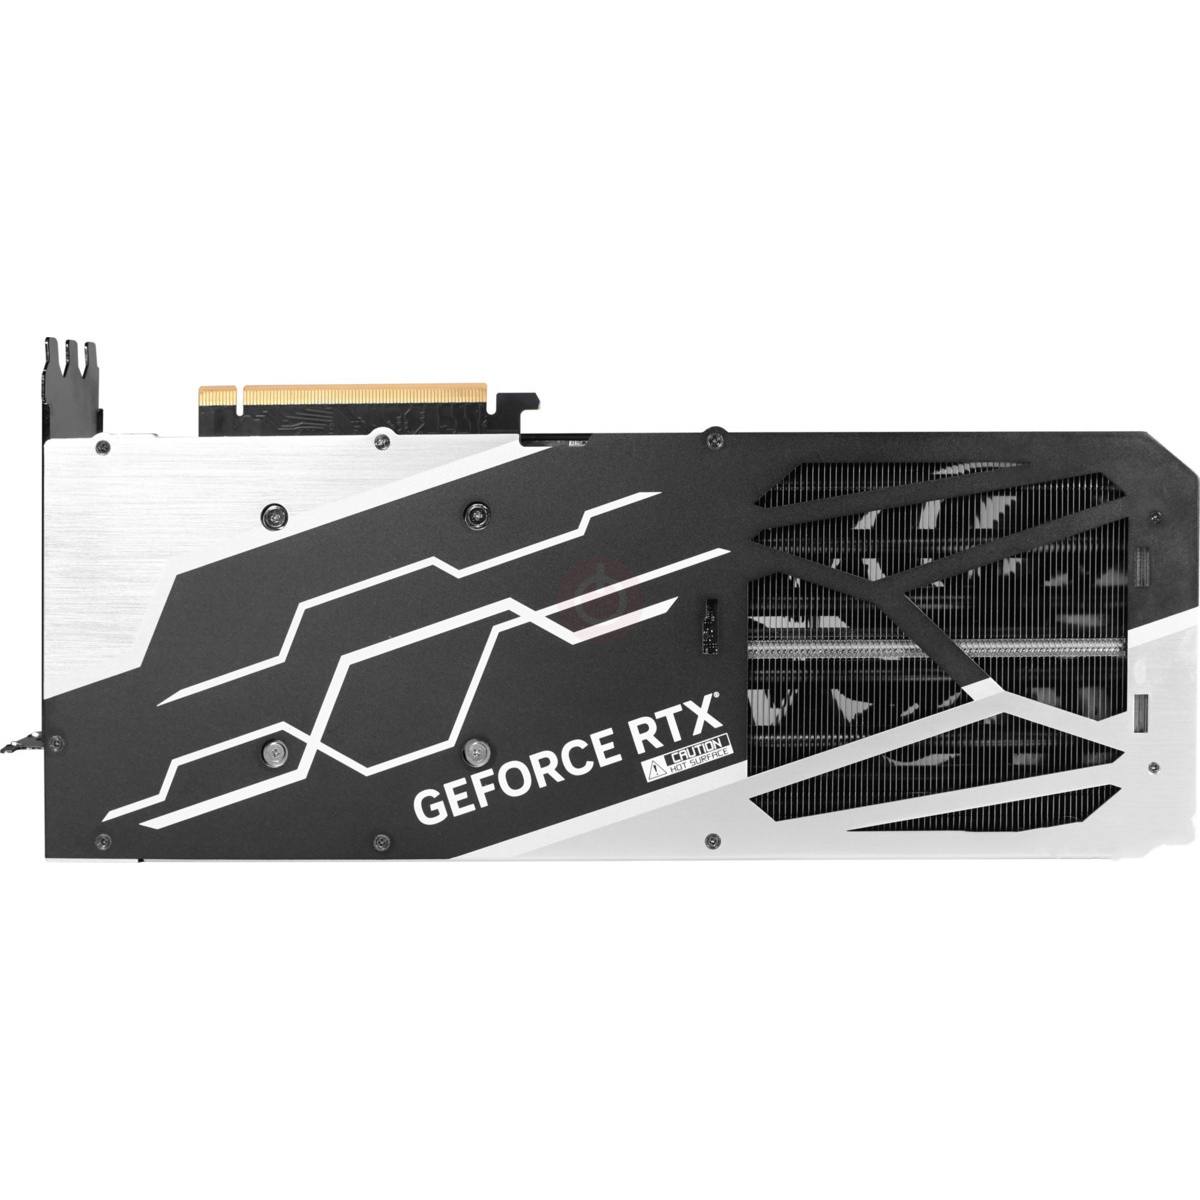 VGA GALAX GeForce RTX 4090 SG (1-Click OC Feature)